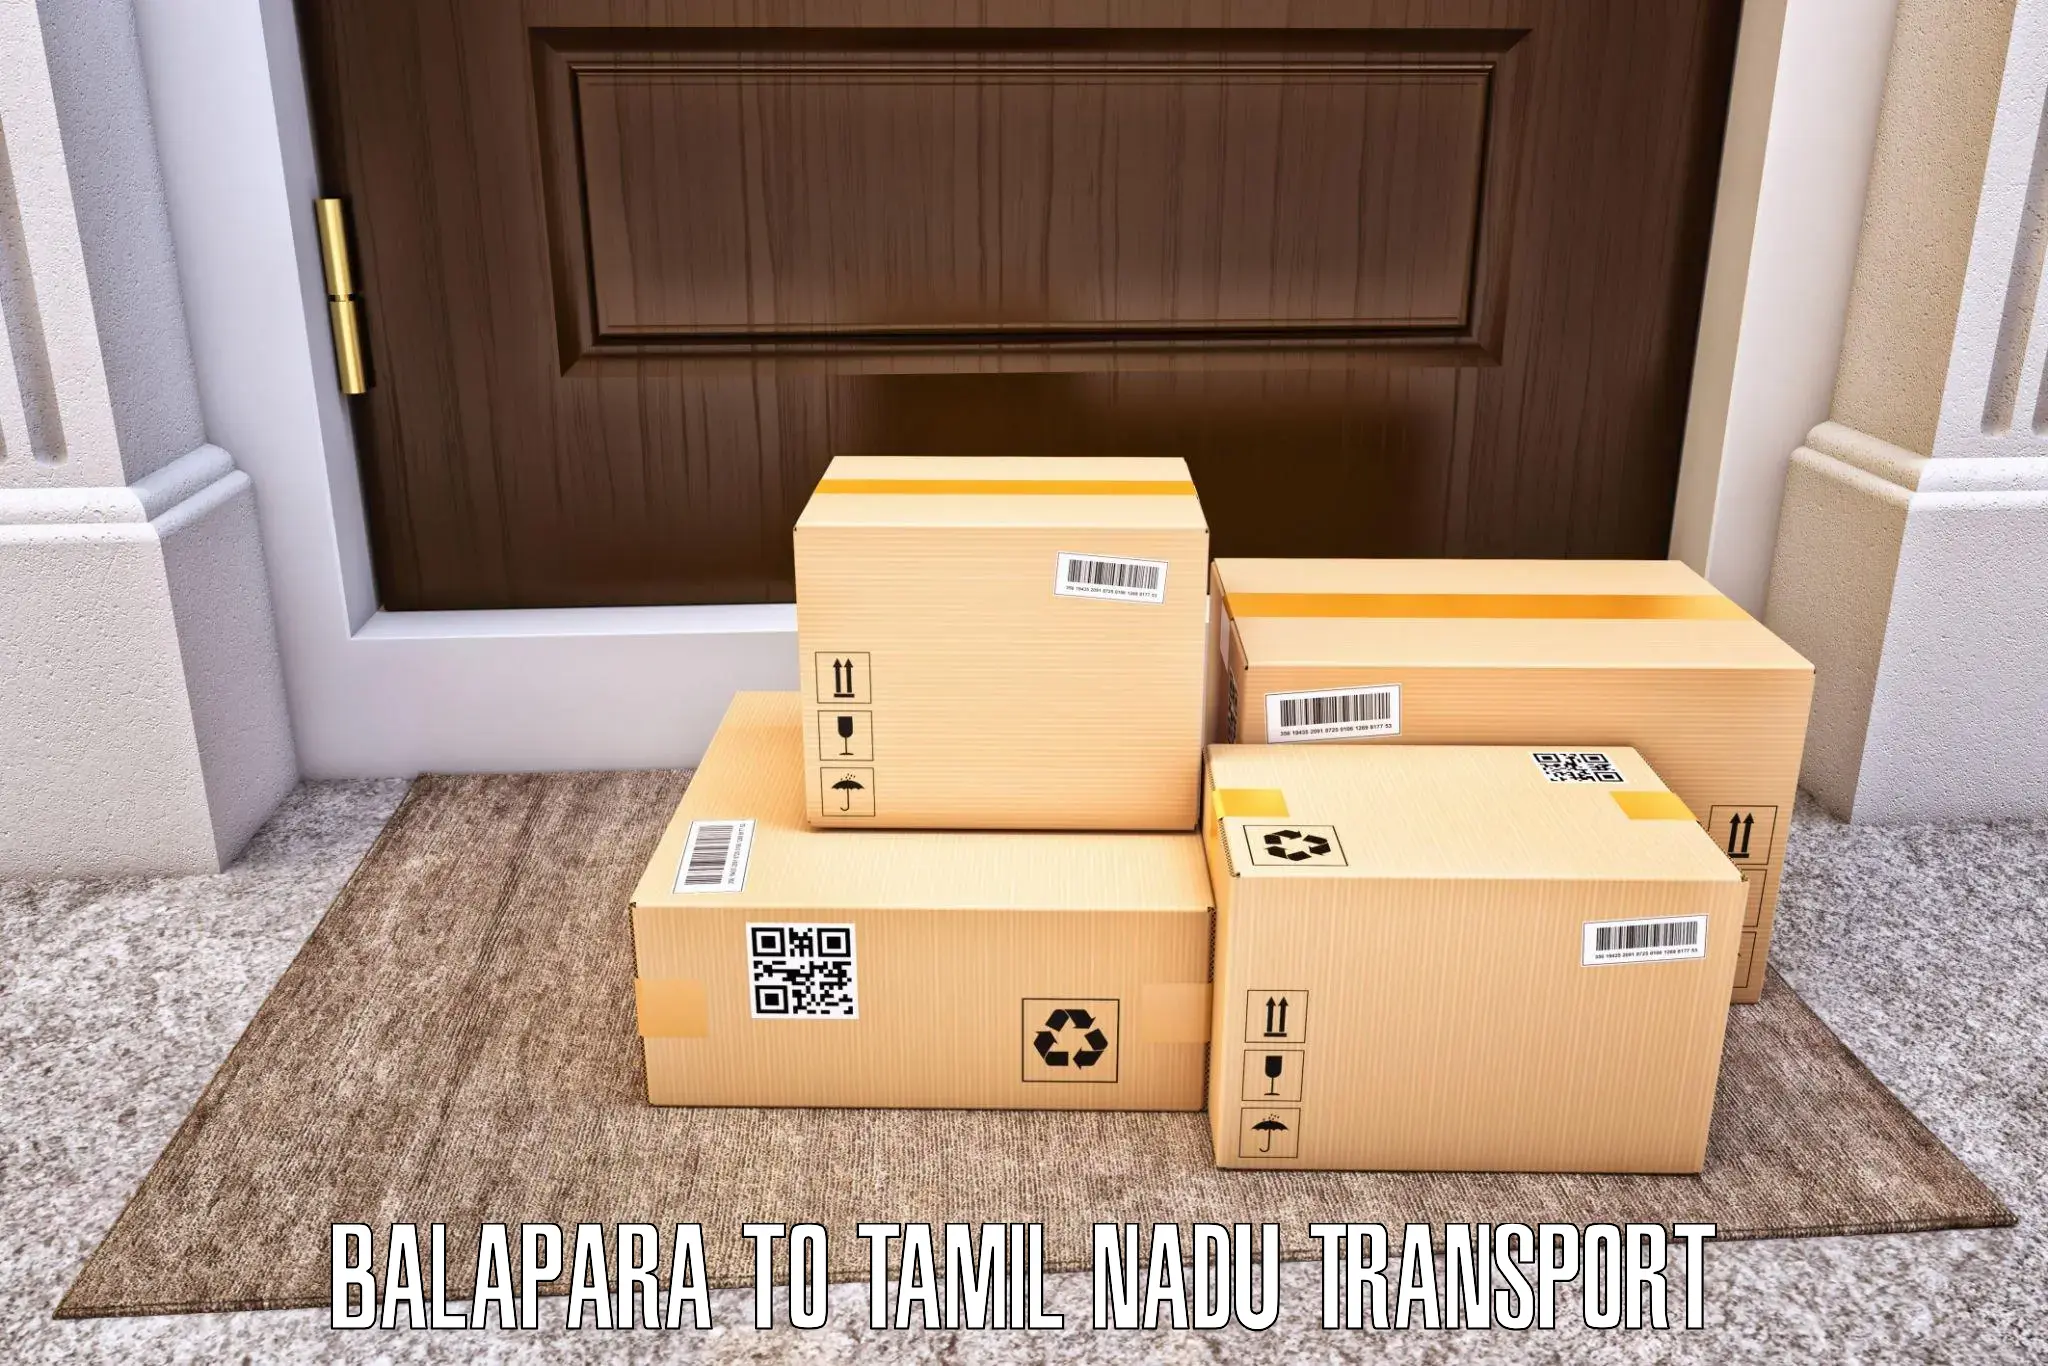 Transport in sharing Balapara to Thygarayanagar